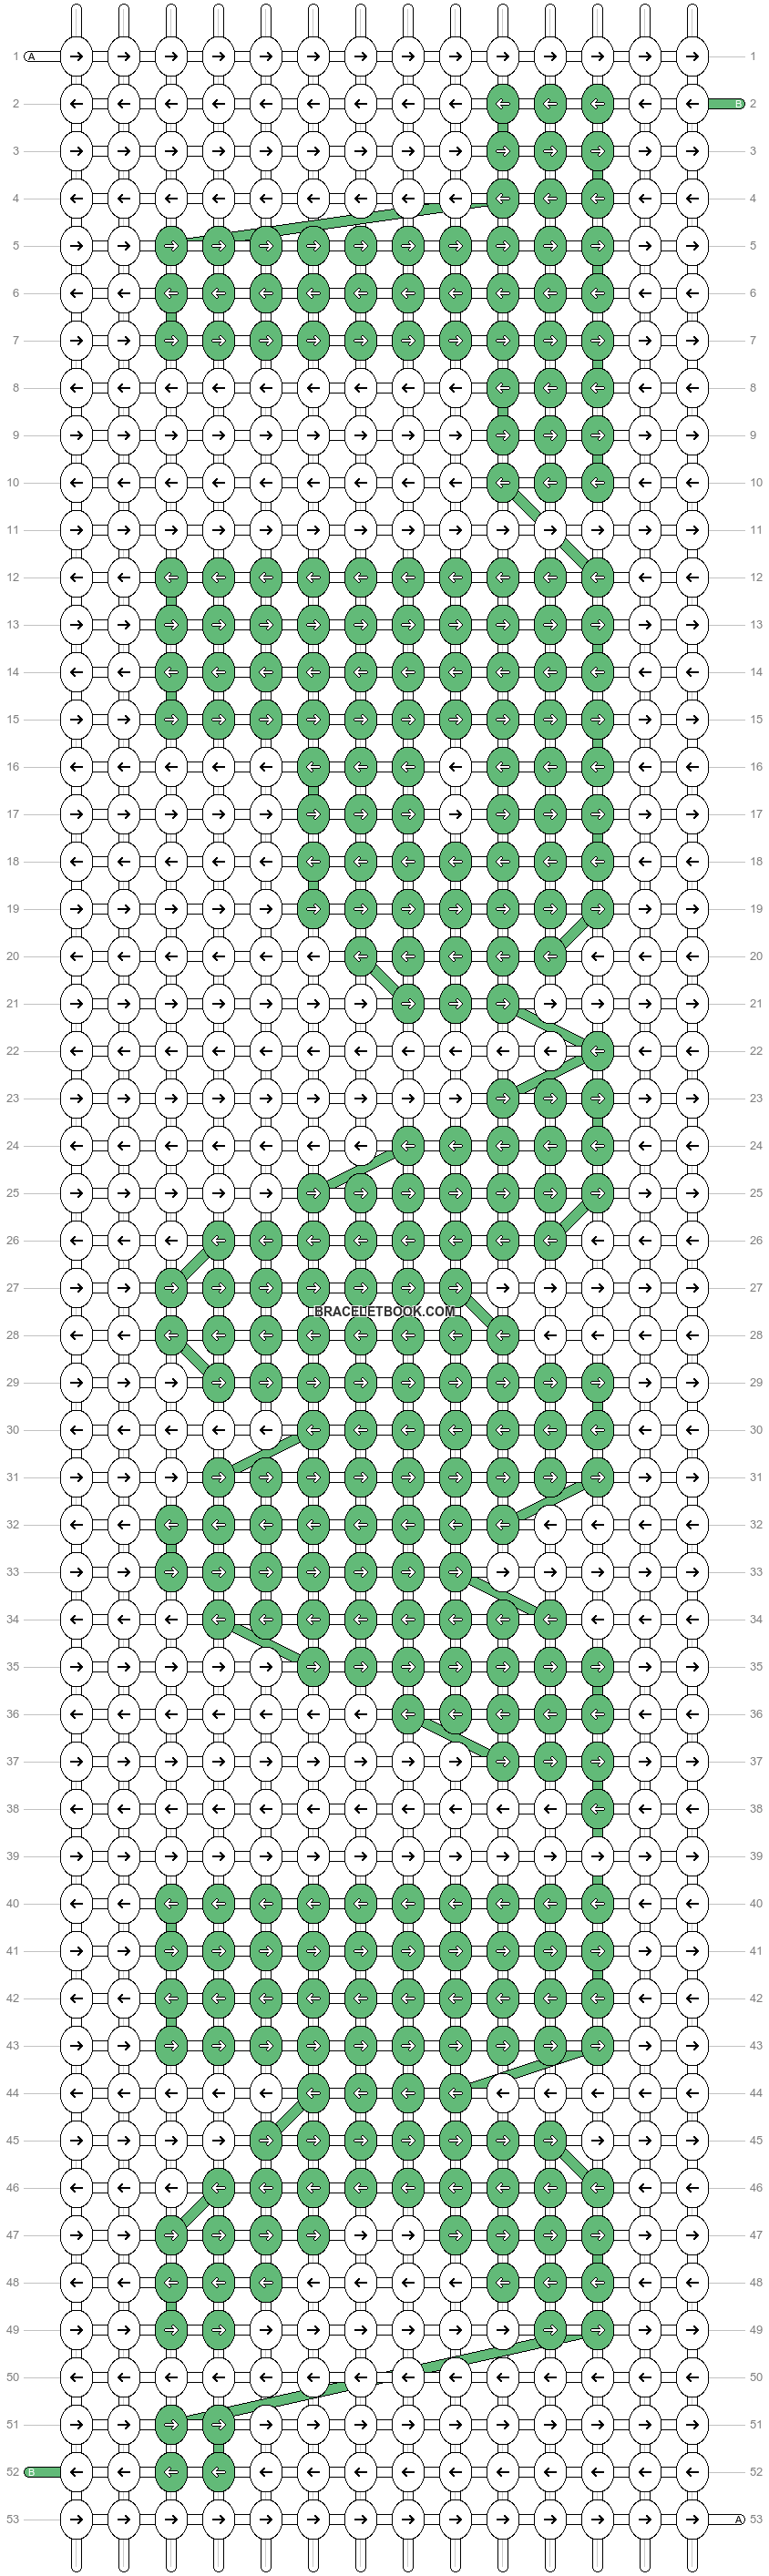 Alpha pattern #38816 variation #216810 pattern